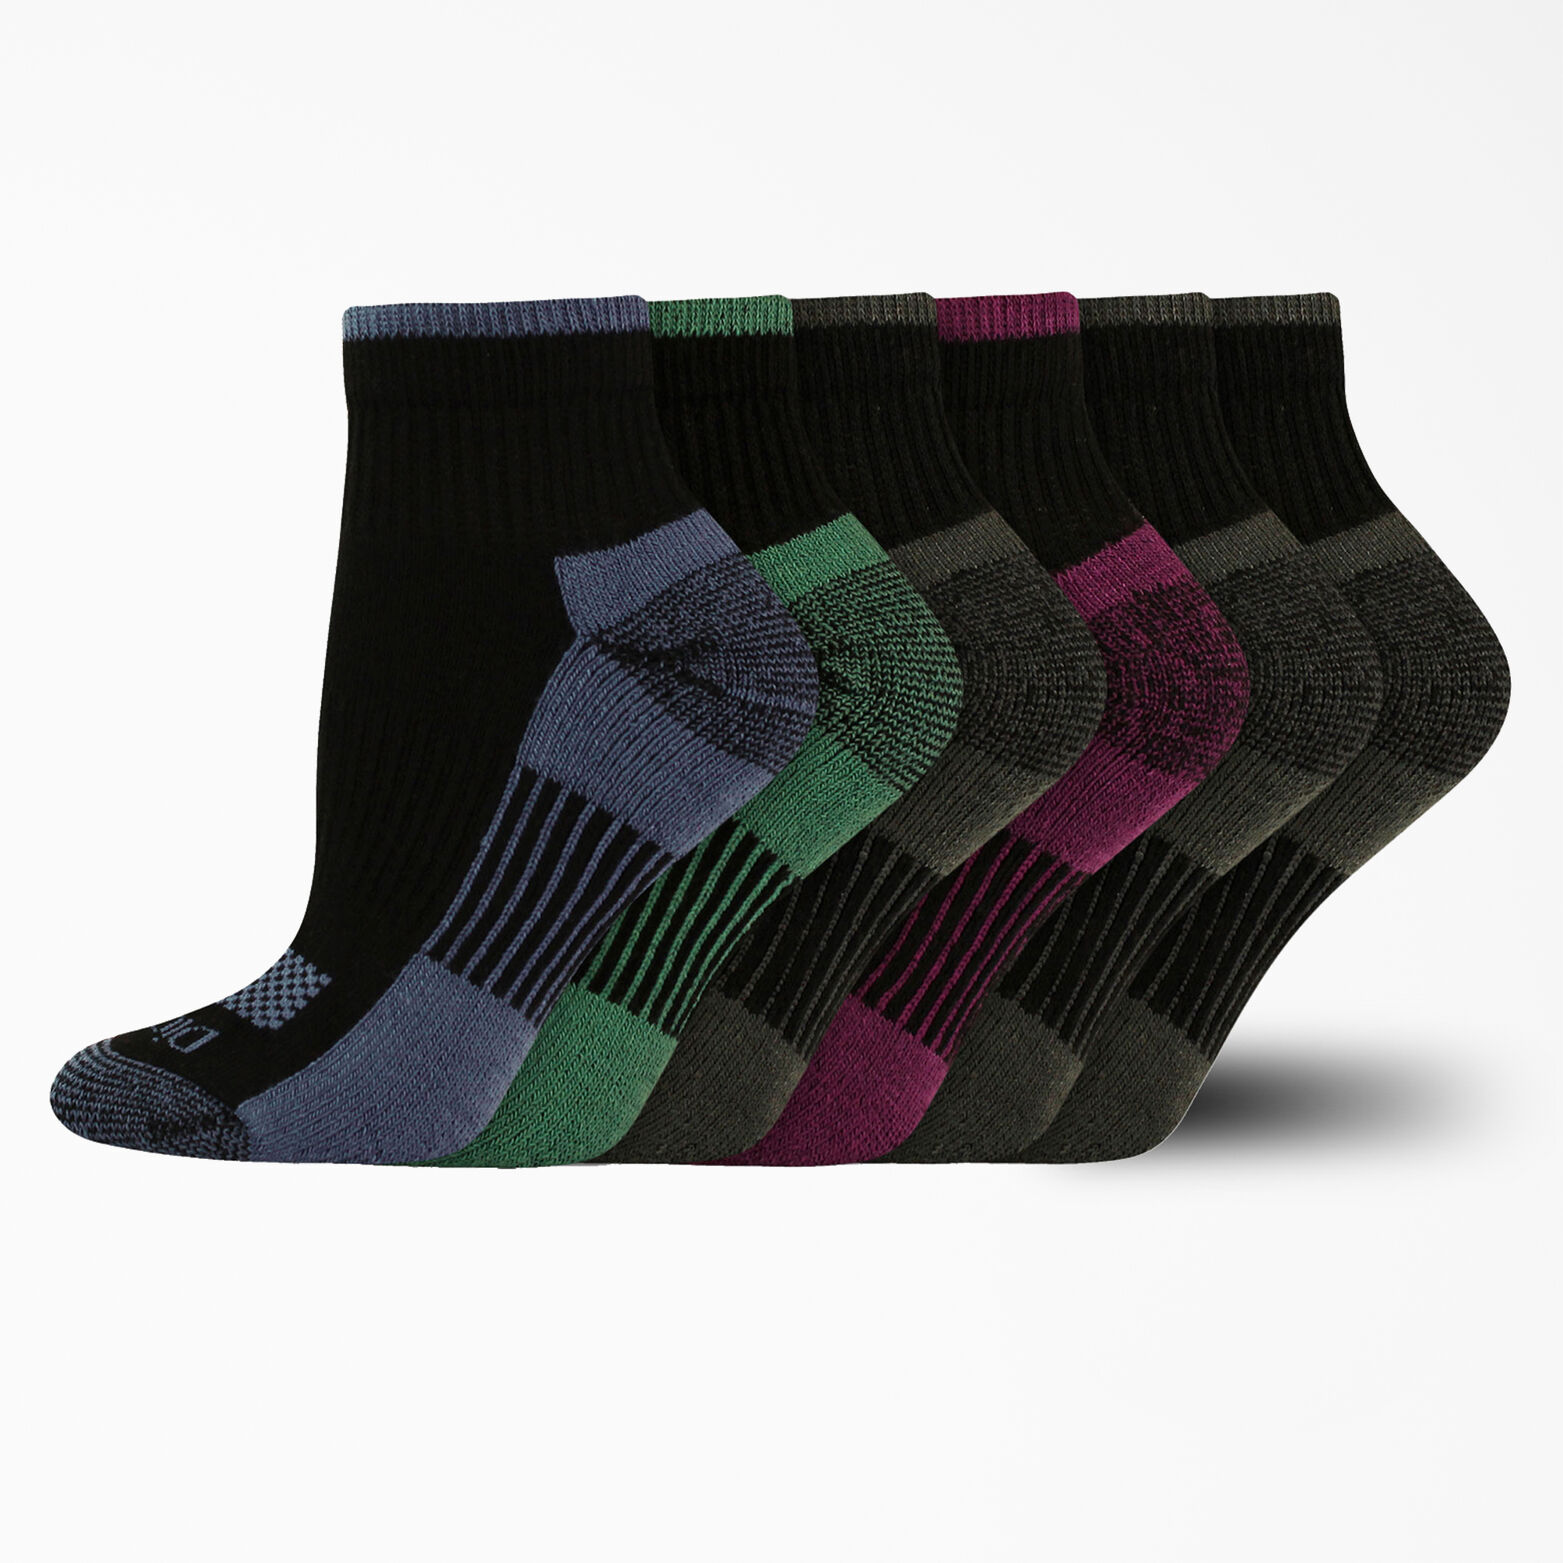 Women's Dri-Tech Quarter Socks, 6-Pack, Size 6-9